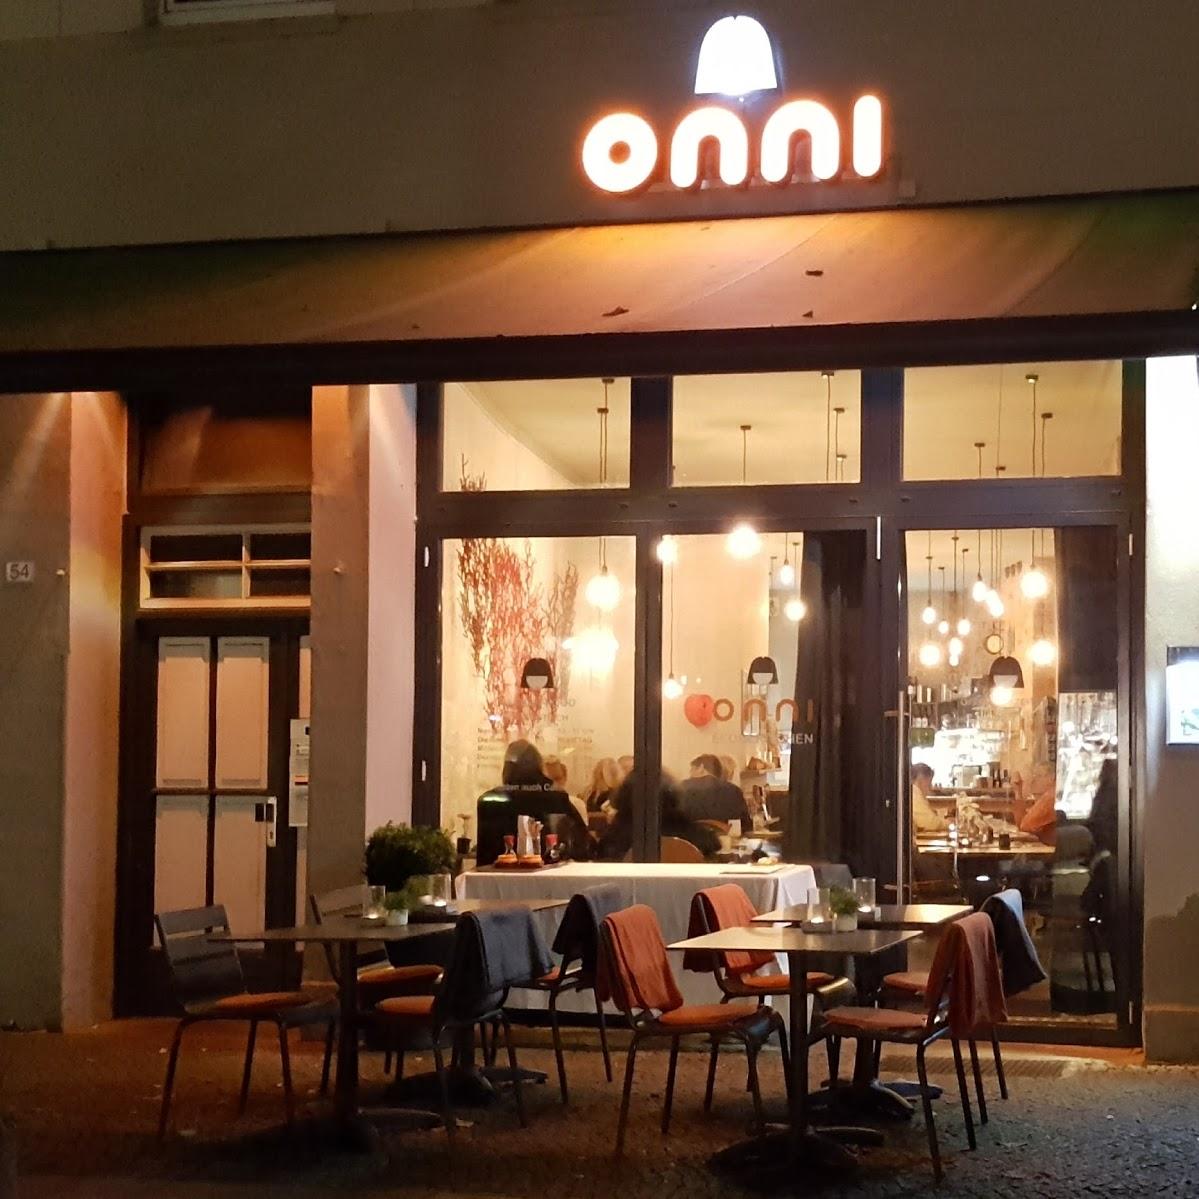 Restaurant "Onni" in  Lübeck